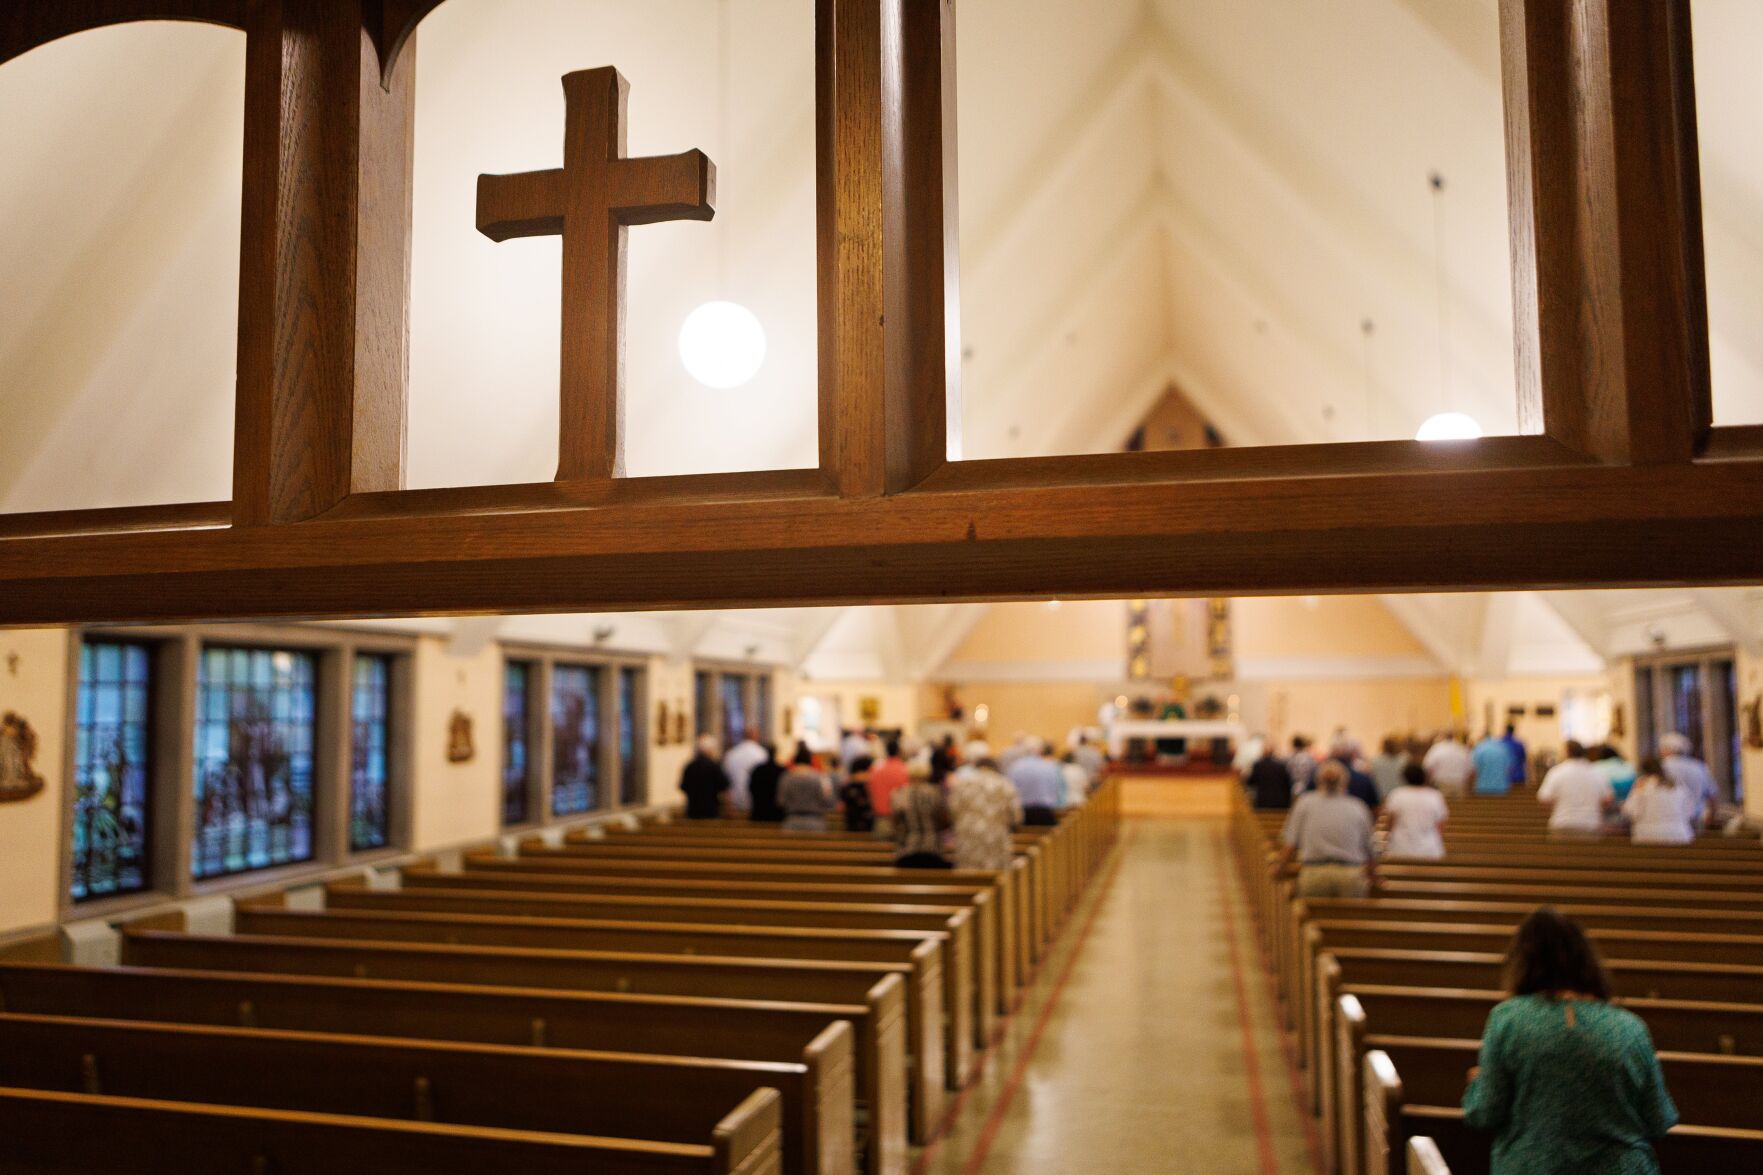 Final Mass at closing Catholic parishes across St. Louis brings